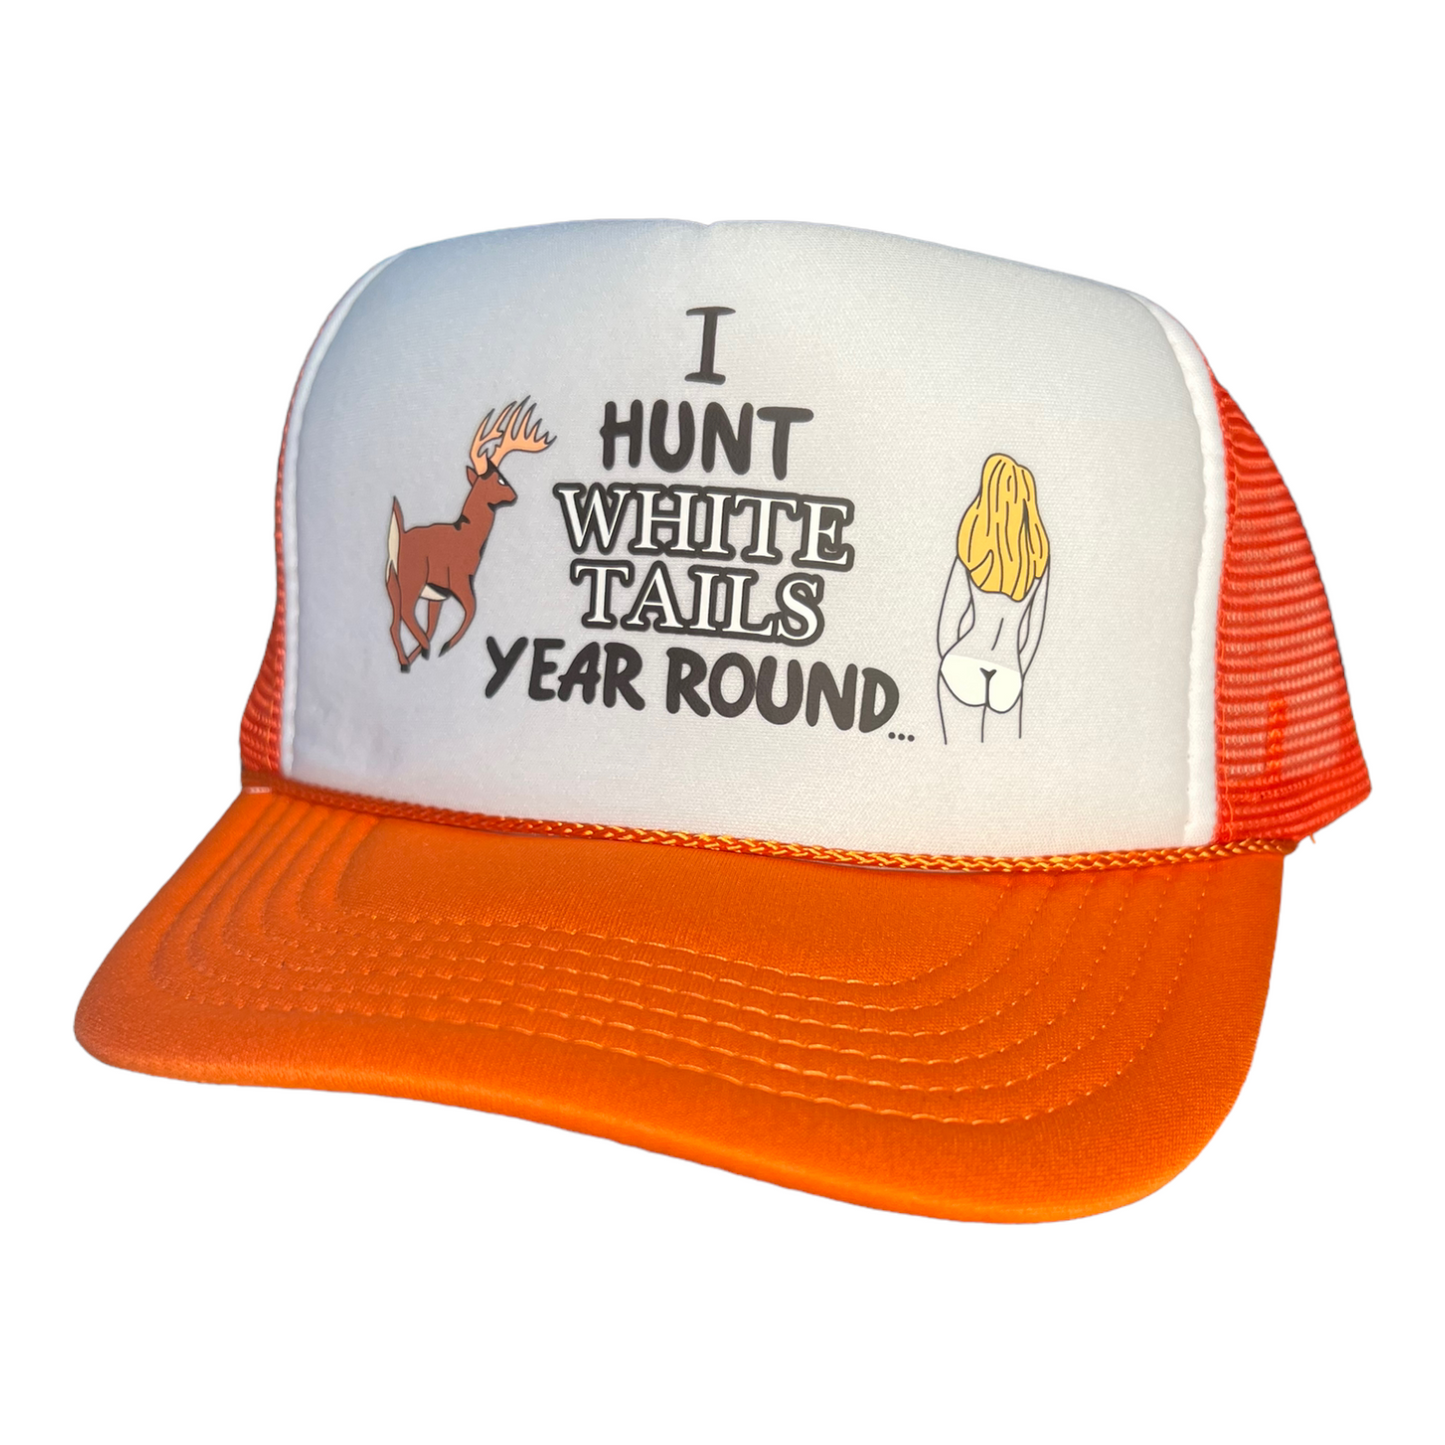 I Hunt White Tails Year Round Trucker Hat Funny Trucker Hat Orange / White